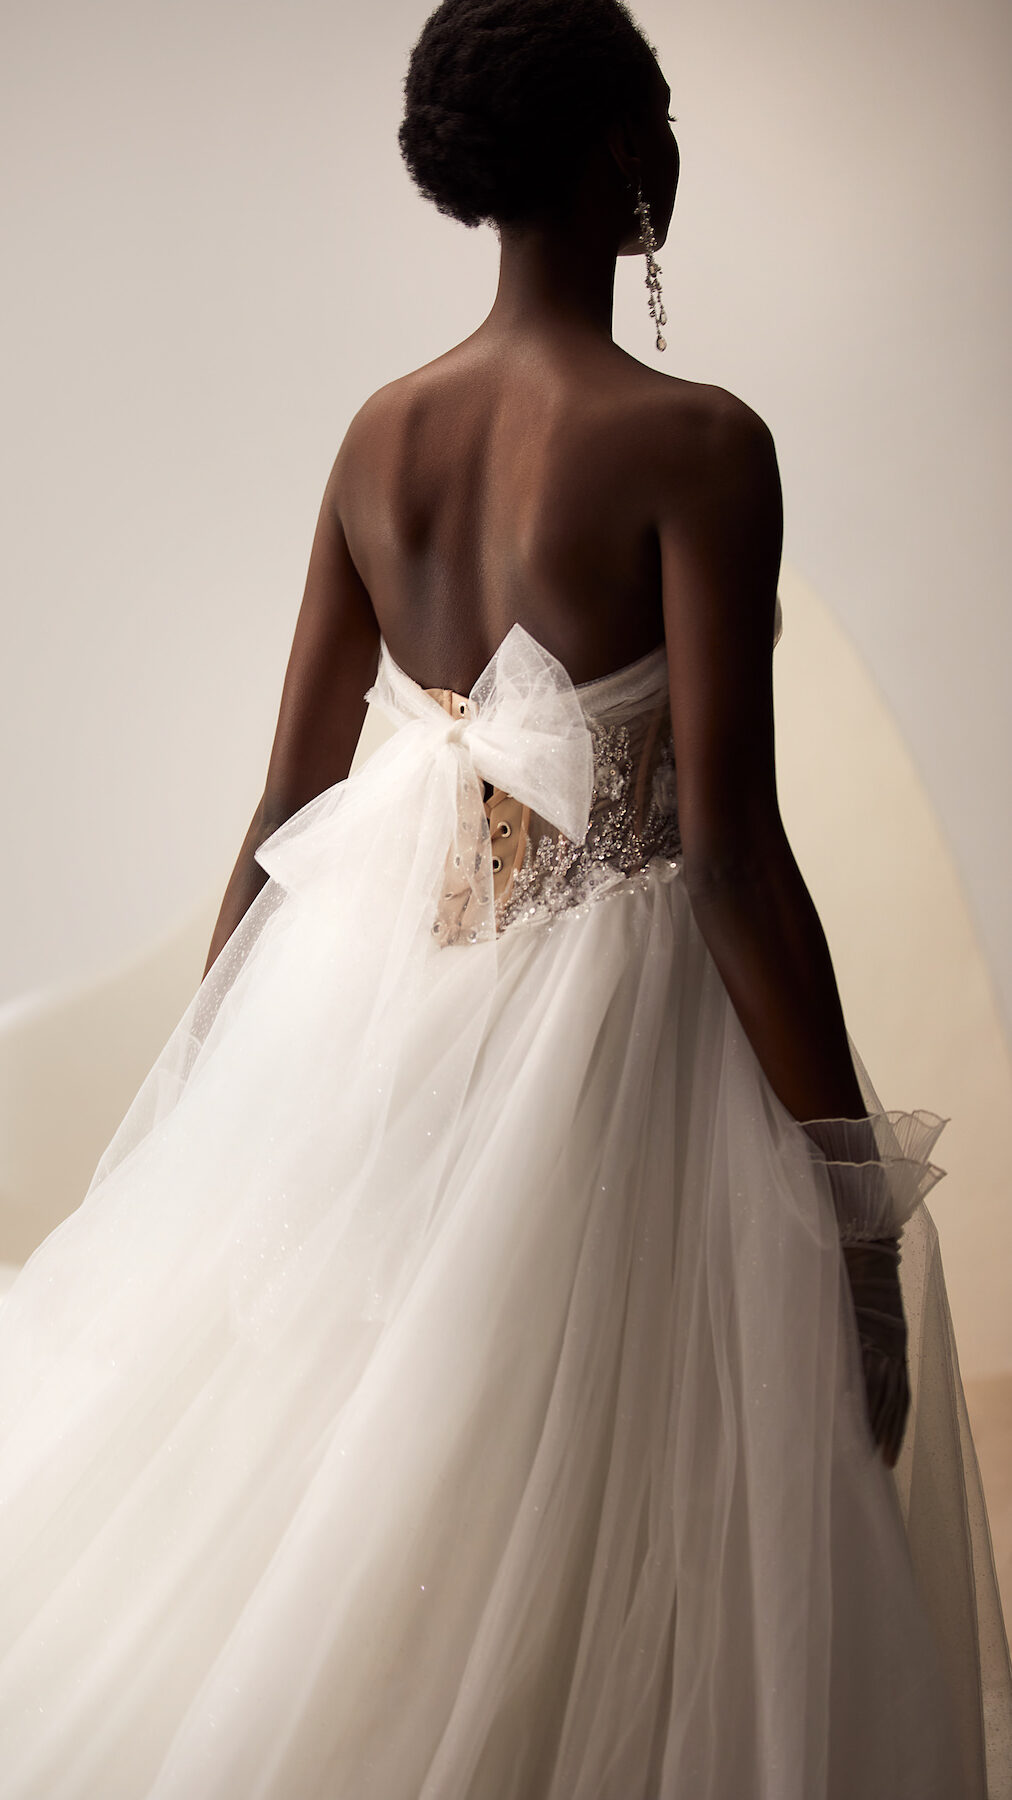 Ball Gown Wedding Dress by Milla Nova - Margarita white lace